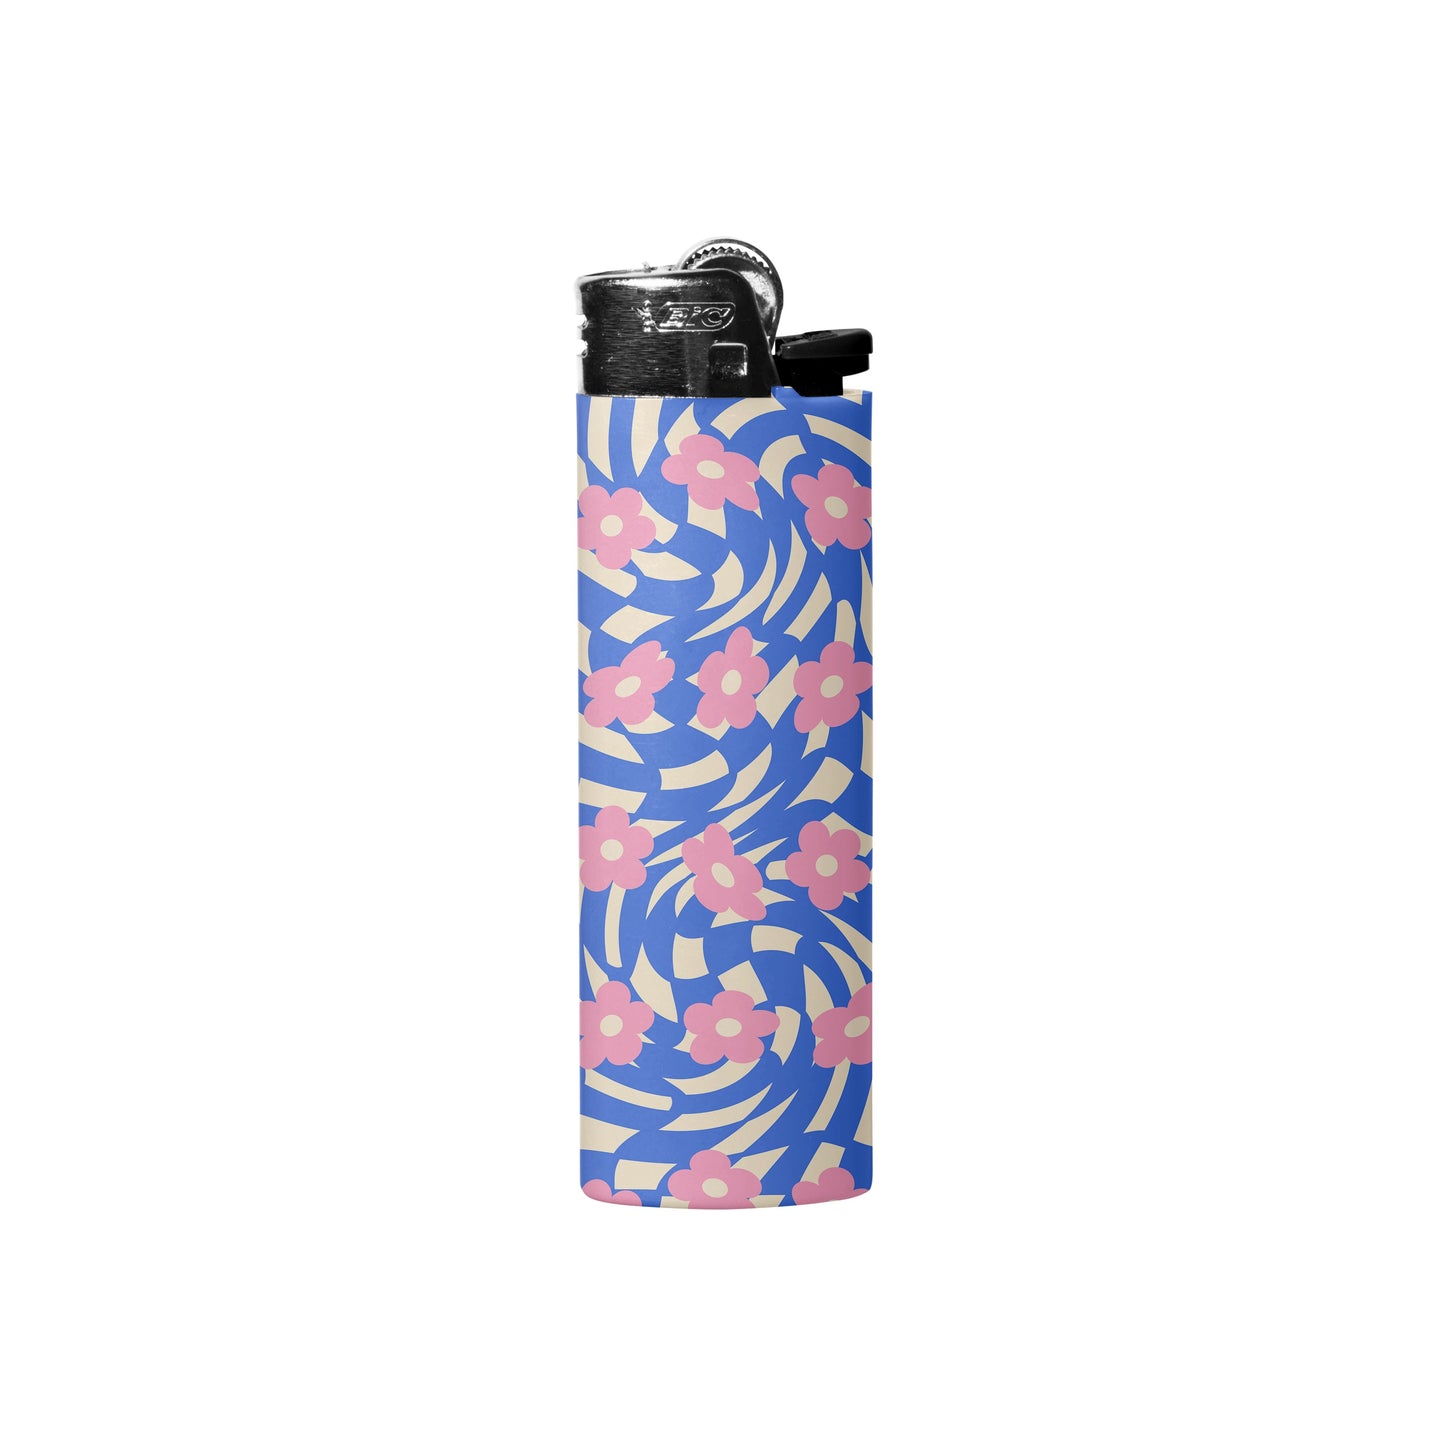 FLOWER TRIP Lighter